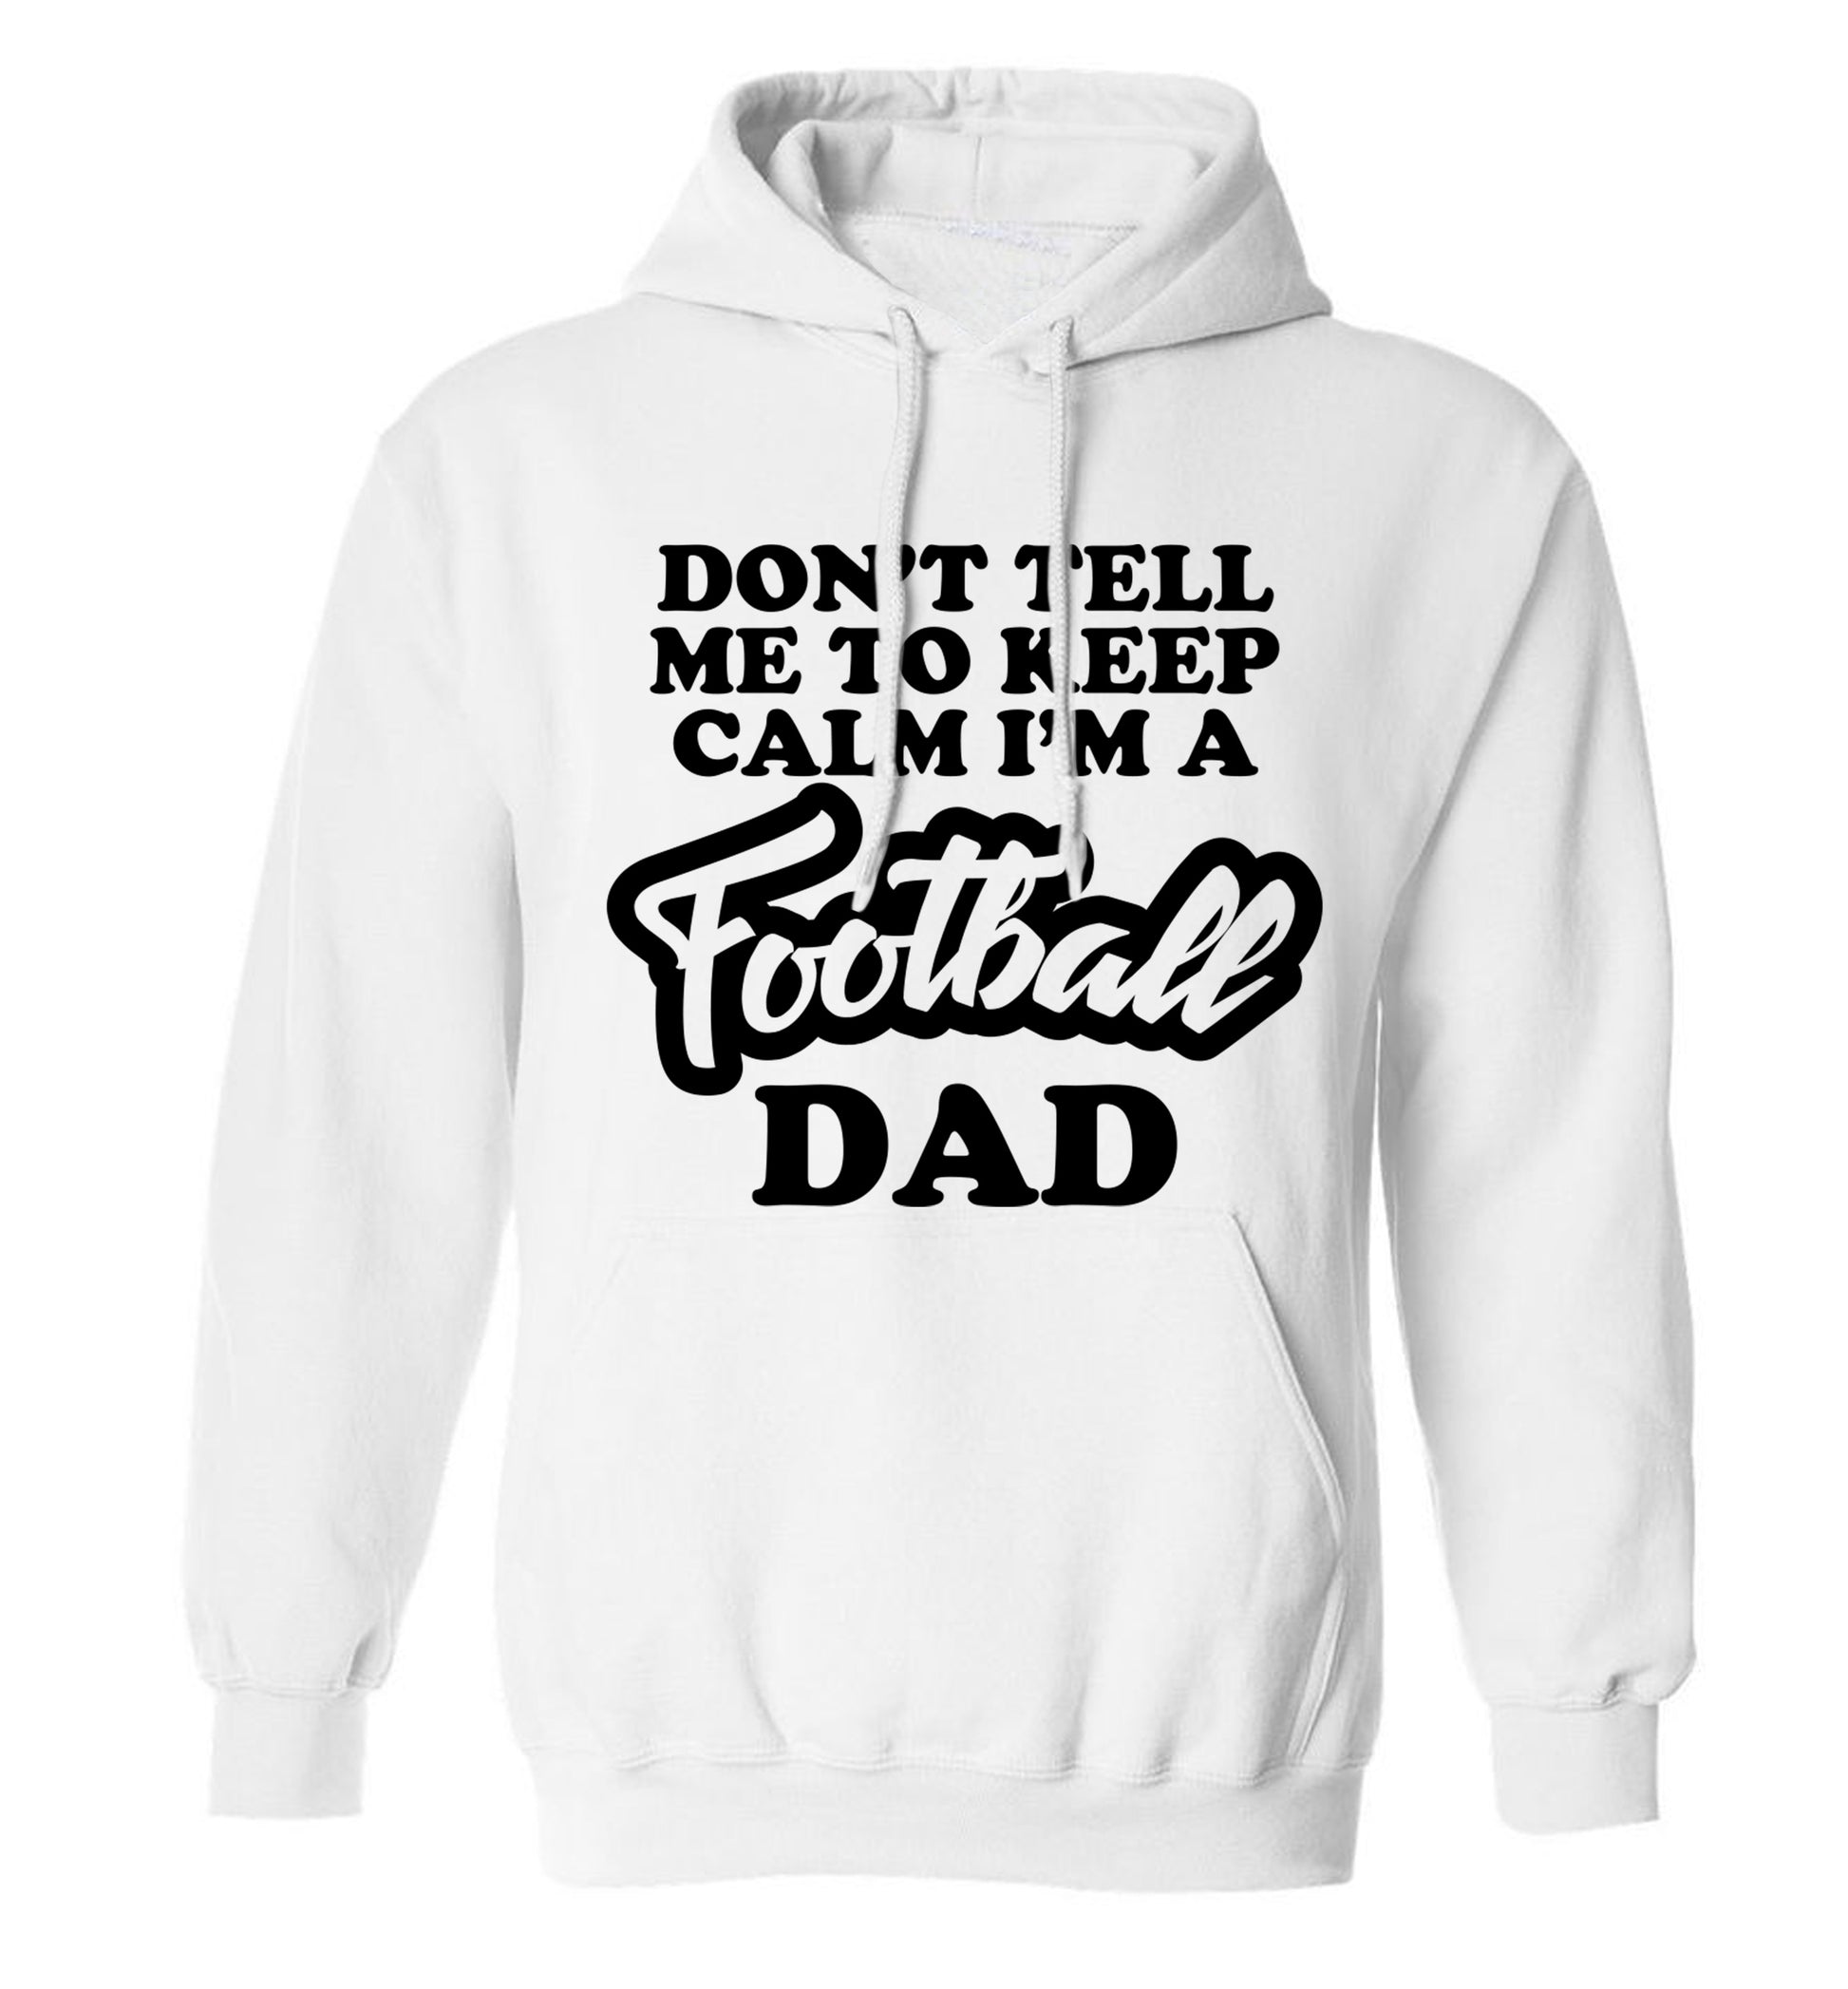 Don't tell me to keep calm I'm a football grandad adults unisexwhite hoodie 2XL